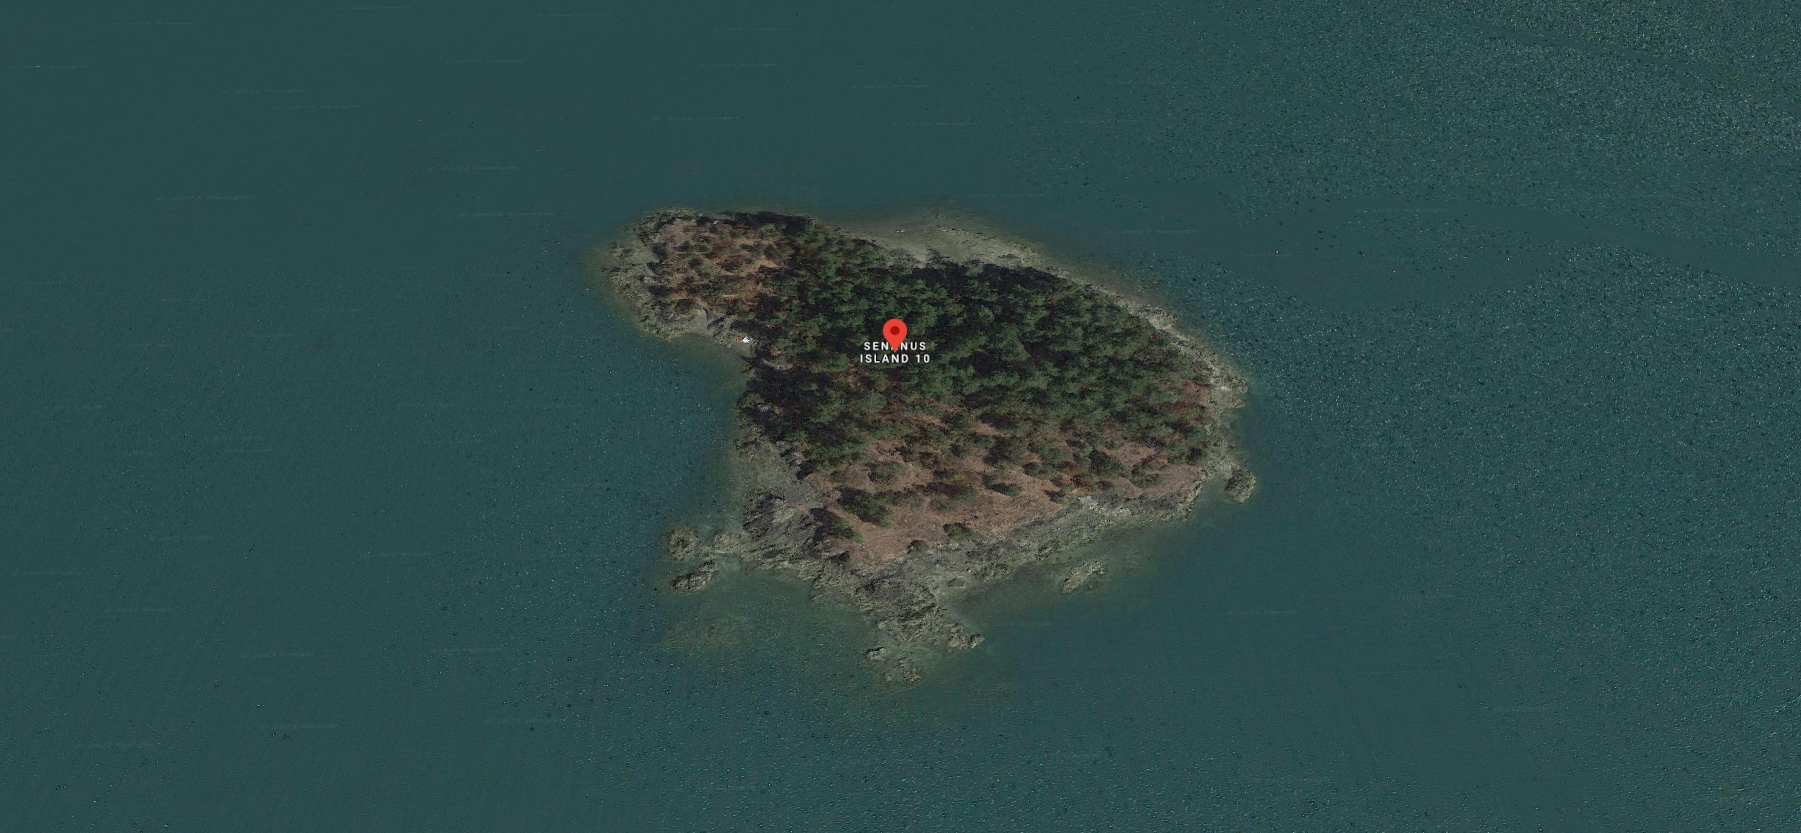 Senanus Island